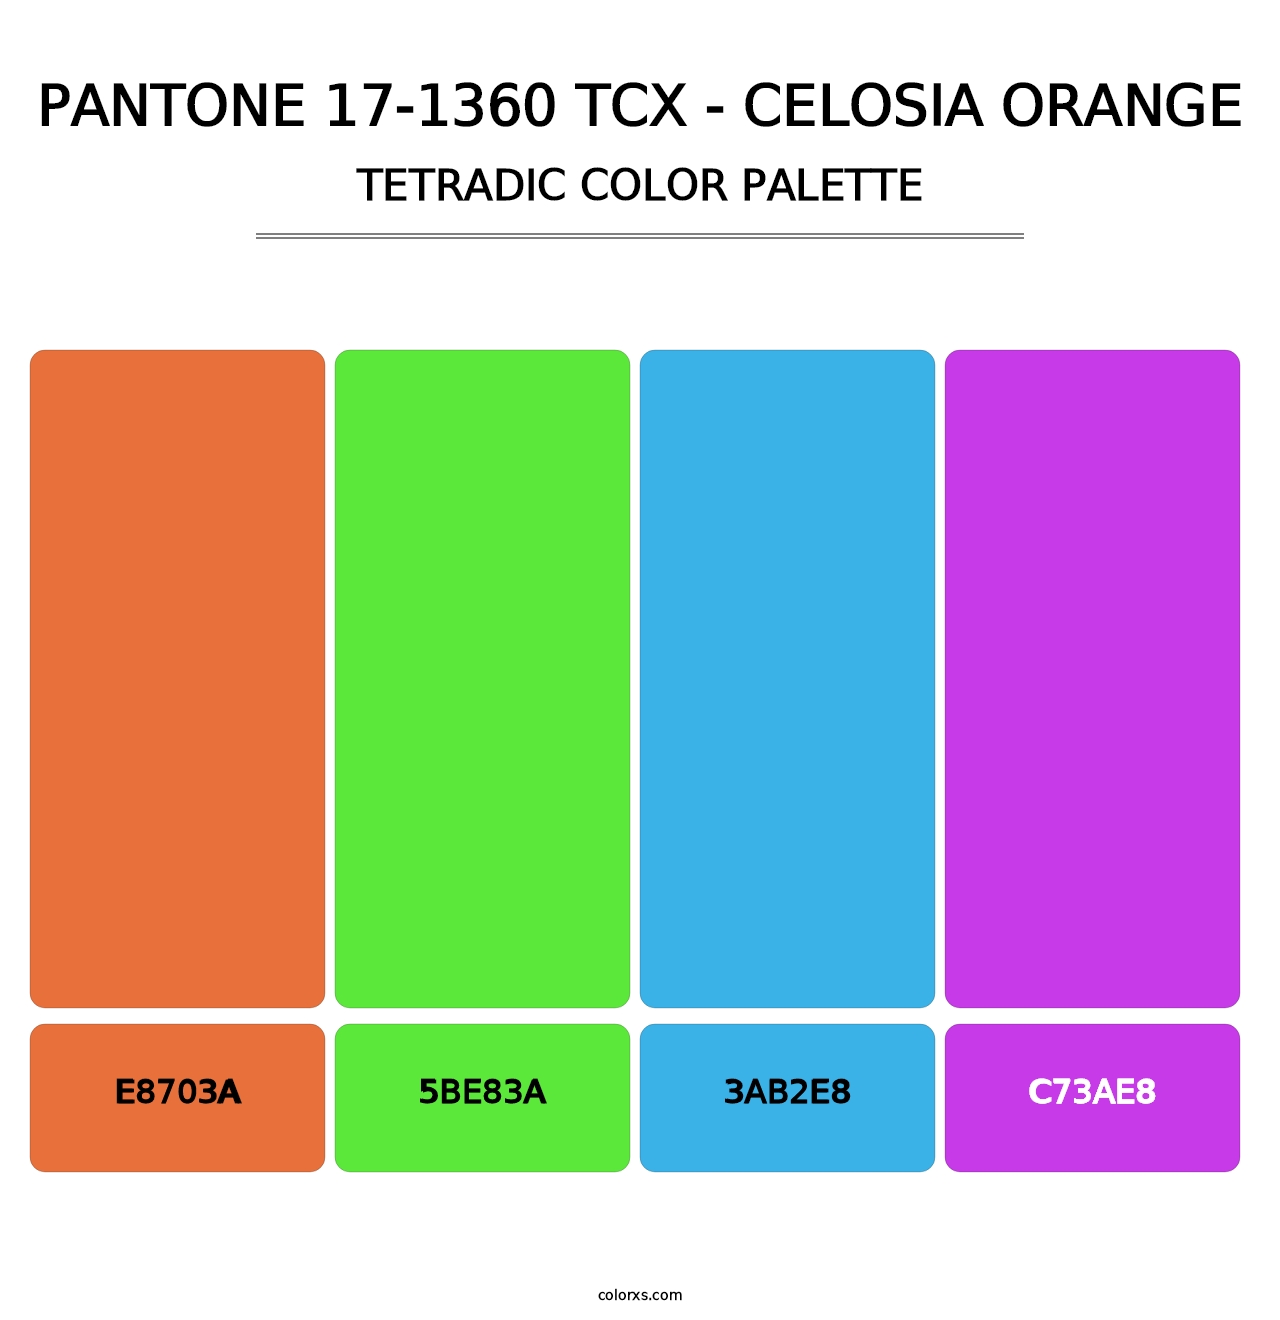 PANTONE 17-1360 TCX - Celosia Orange - Tetradic Color Palette